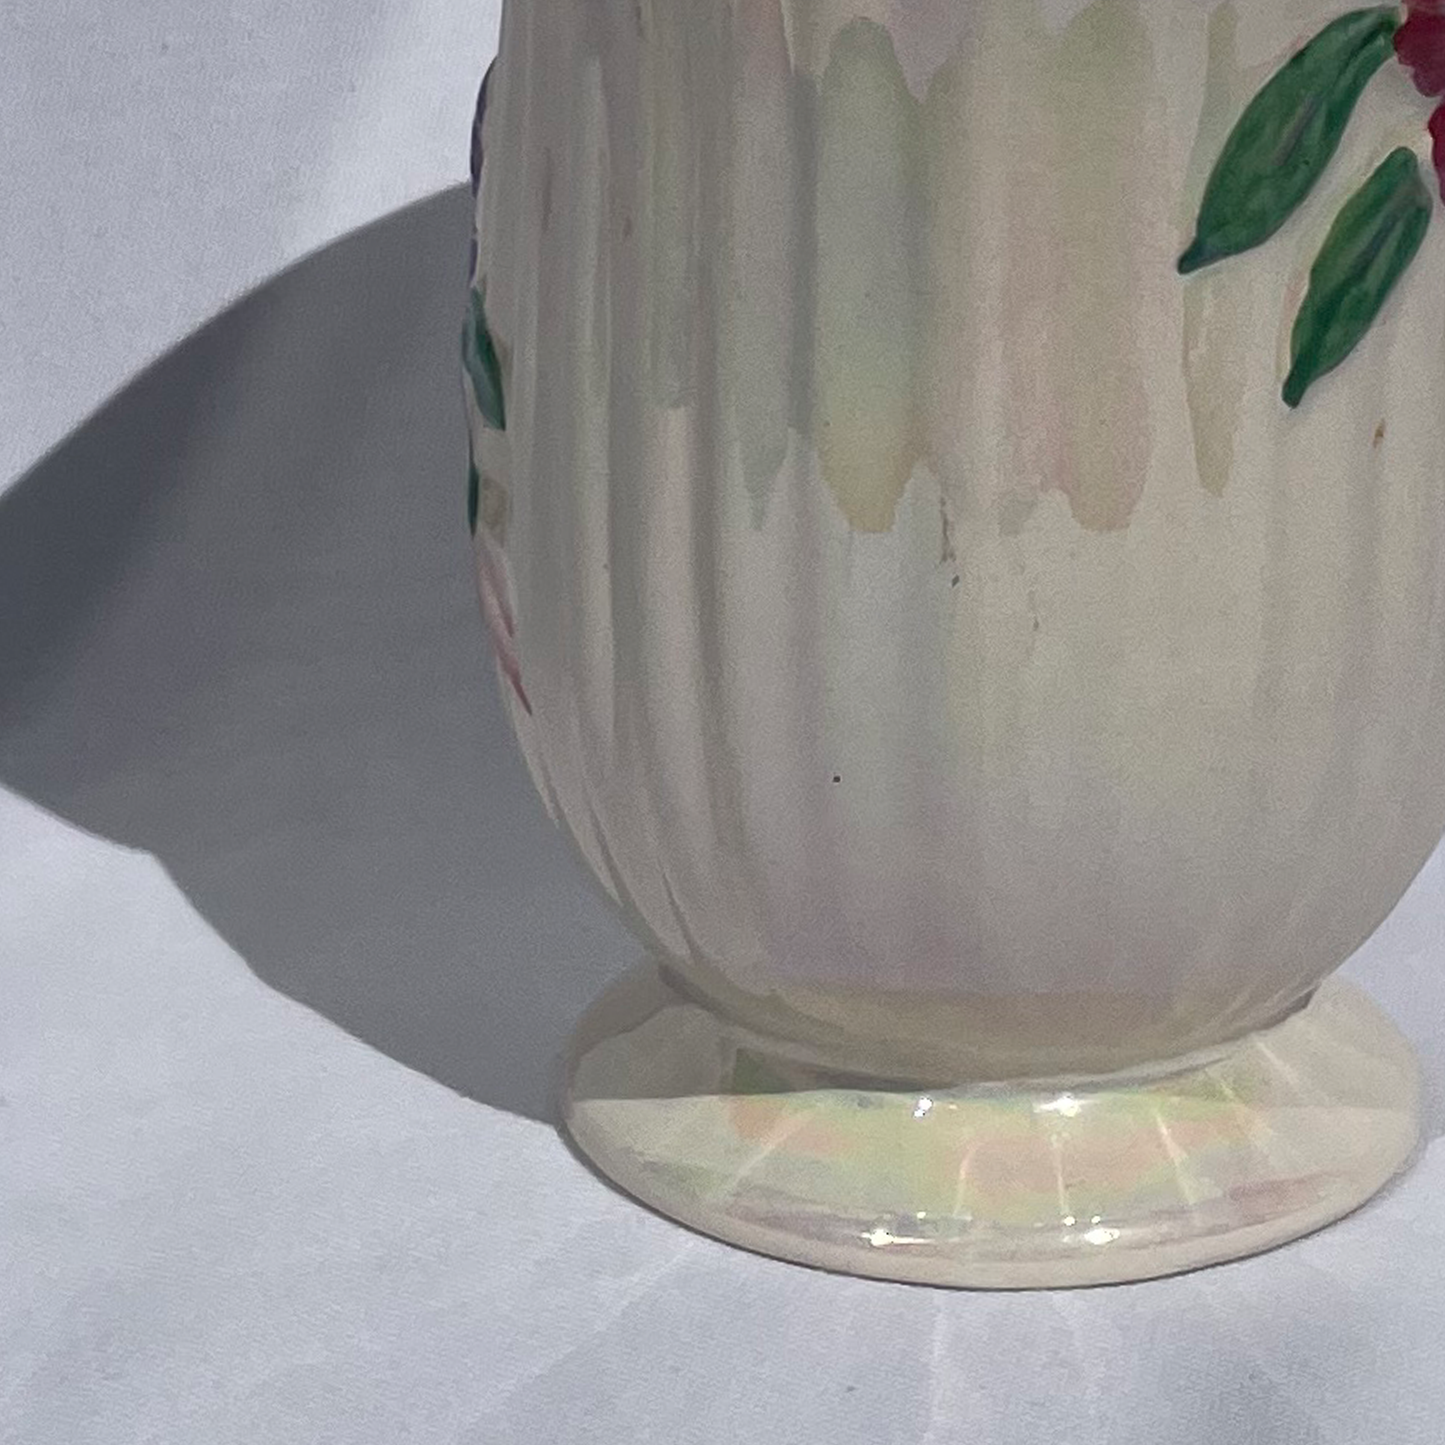 Vintage lustreware jug with cute flower design